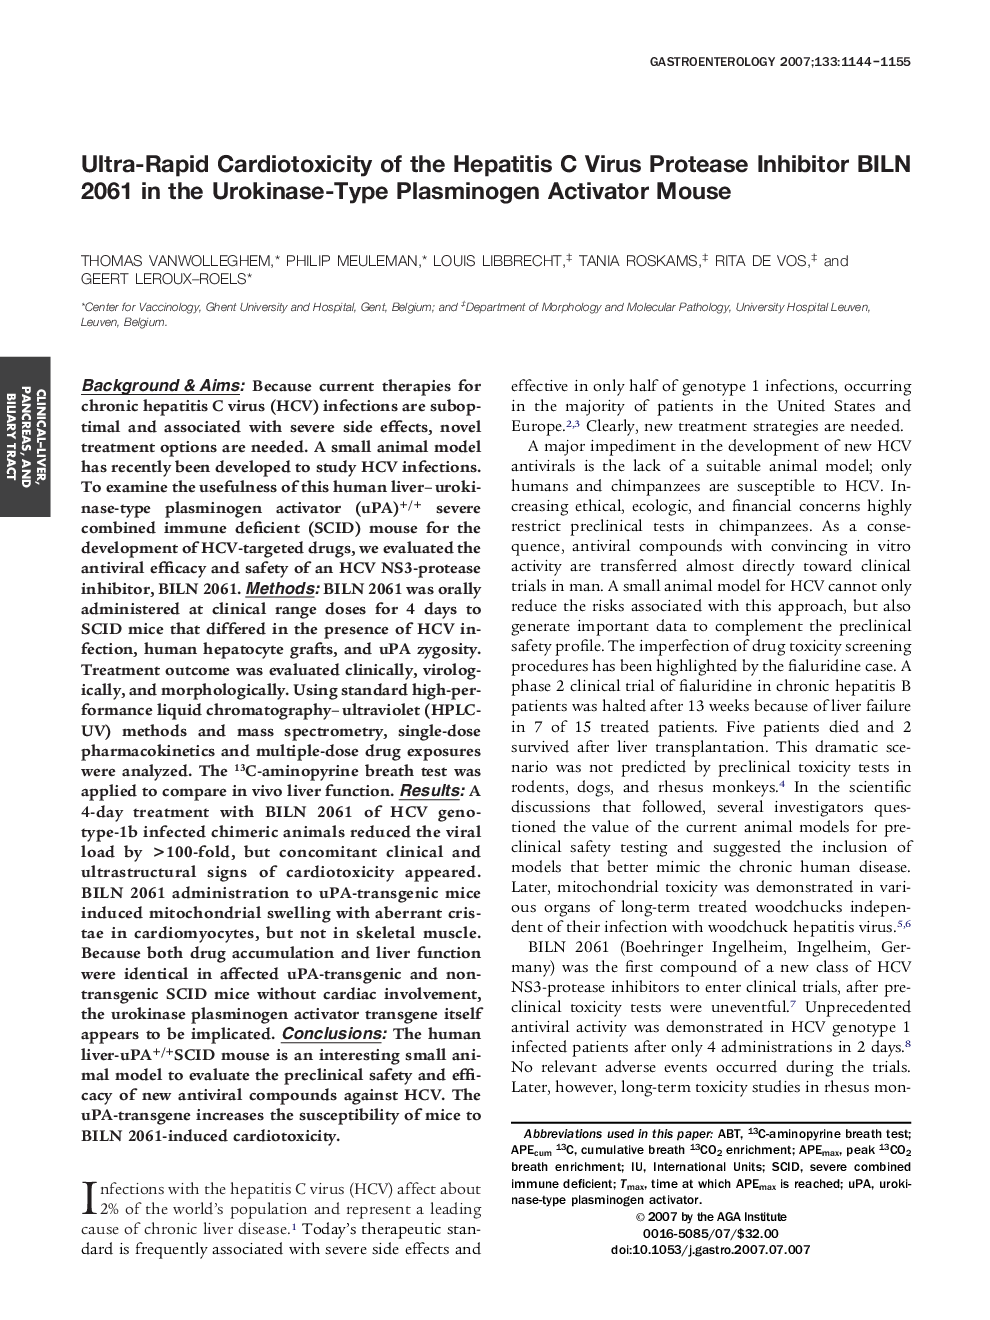 Ultra-Rapid Cardiotoxicity of the Hepatitis C Virus Protease Inhibitor BILN 2061 in the Urokinase-Type Plasminogen Activator Mouse 